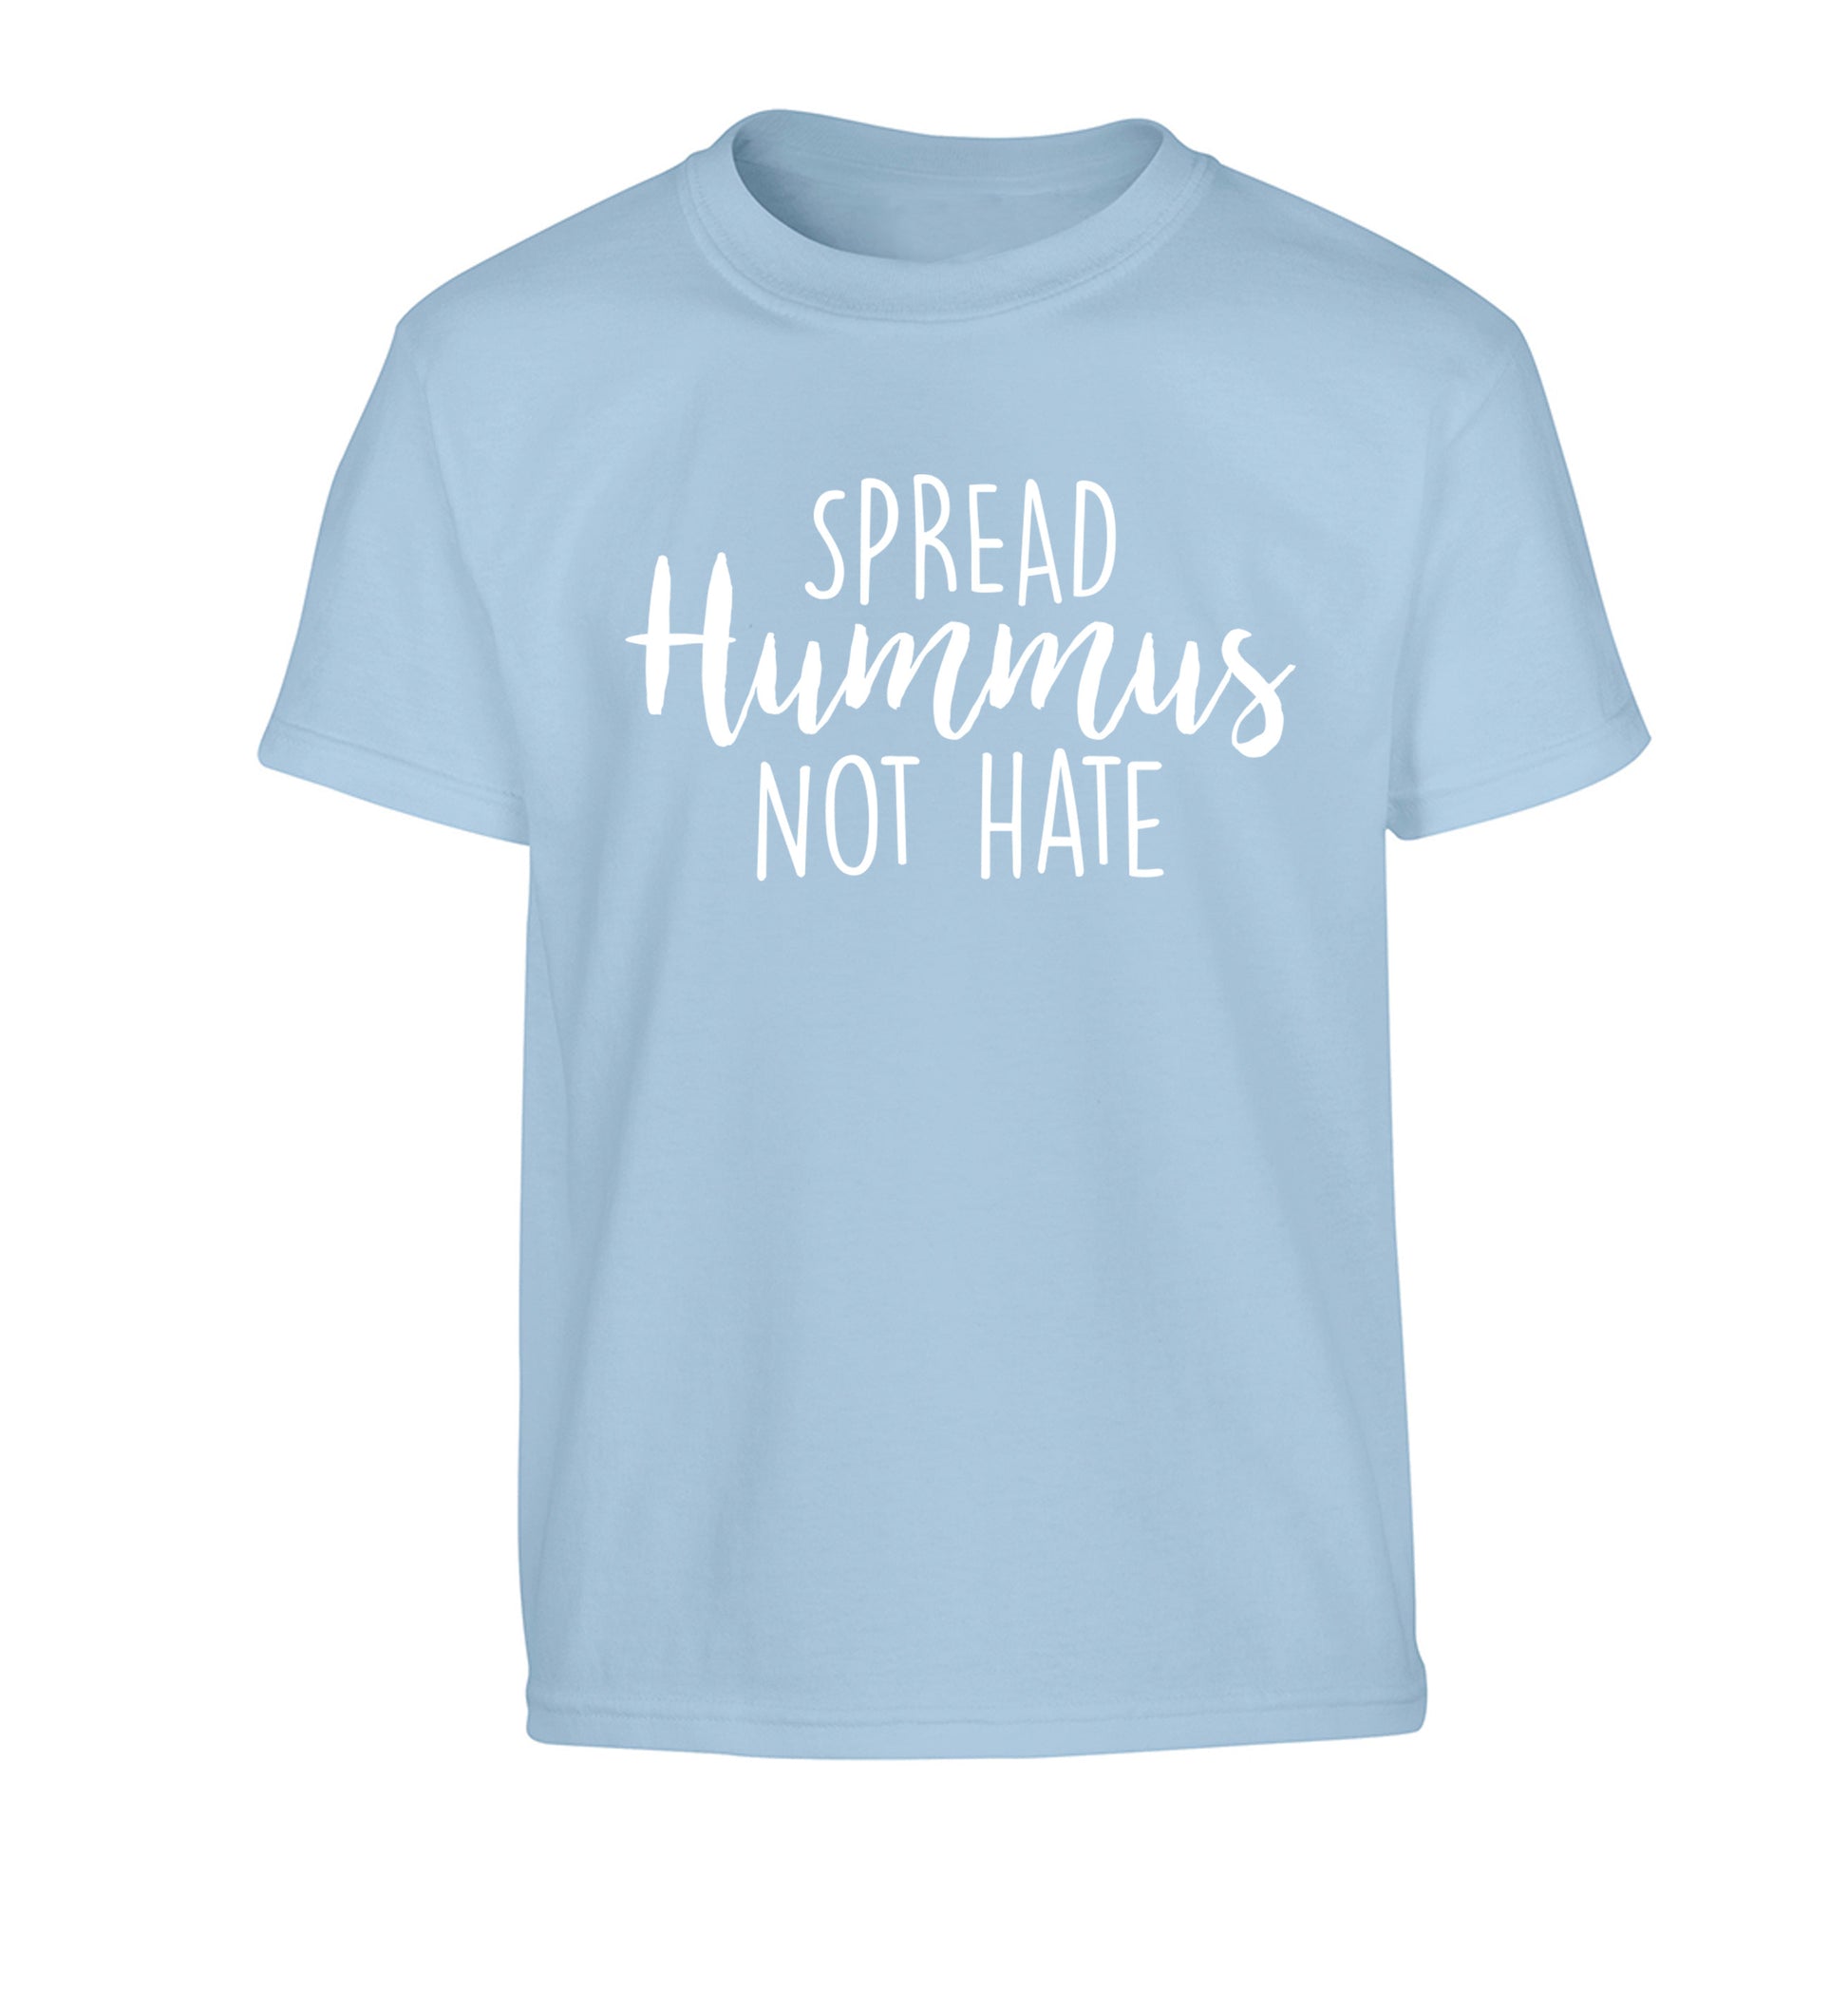 Spread hummus not hate script text Children's light blue Tshirt 12-14 Years